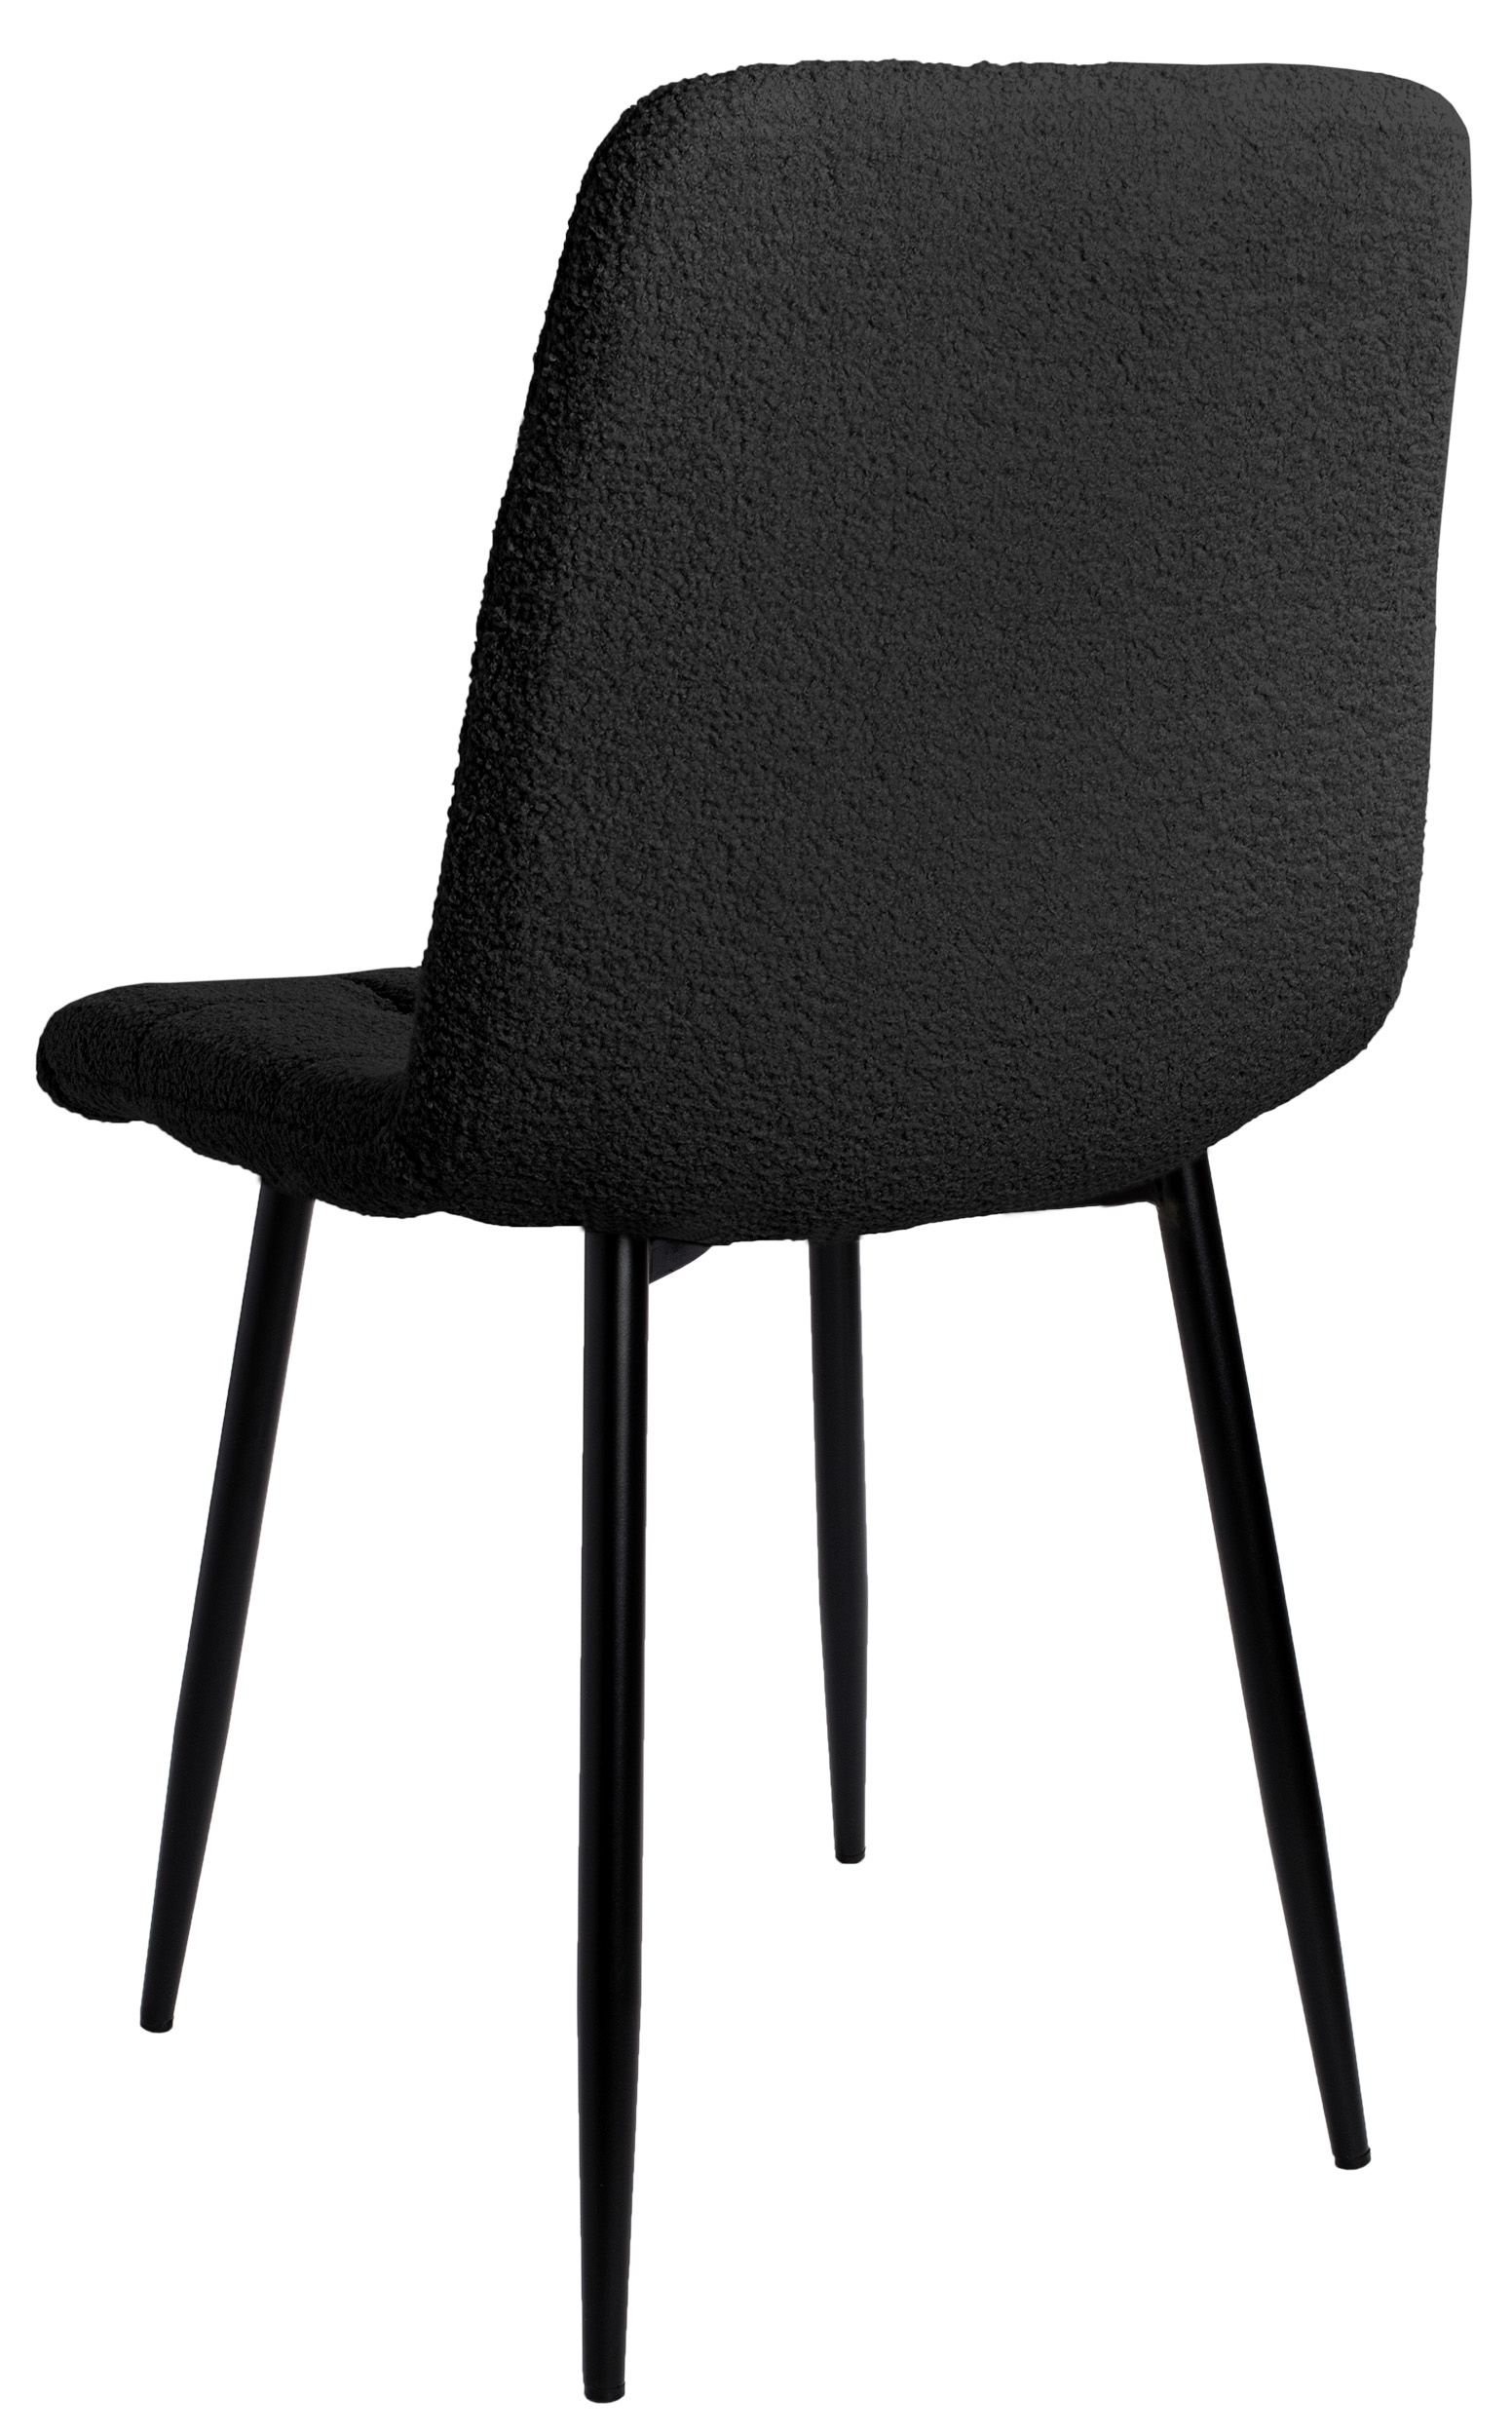 Krzesło DENVER TEDDY boucle czarne